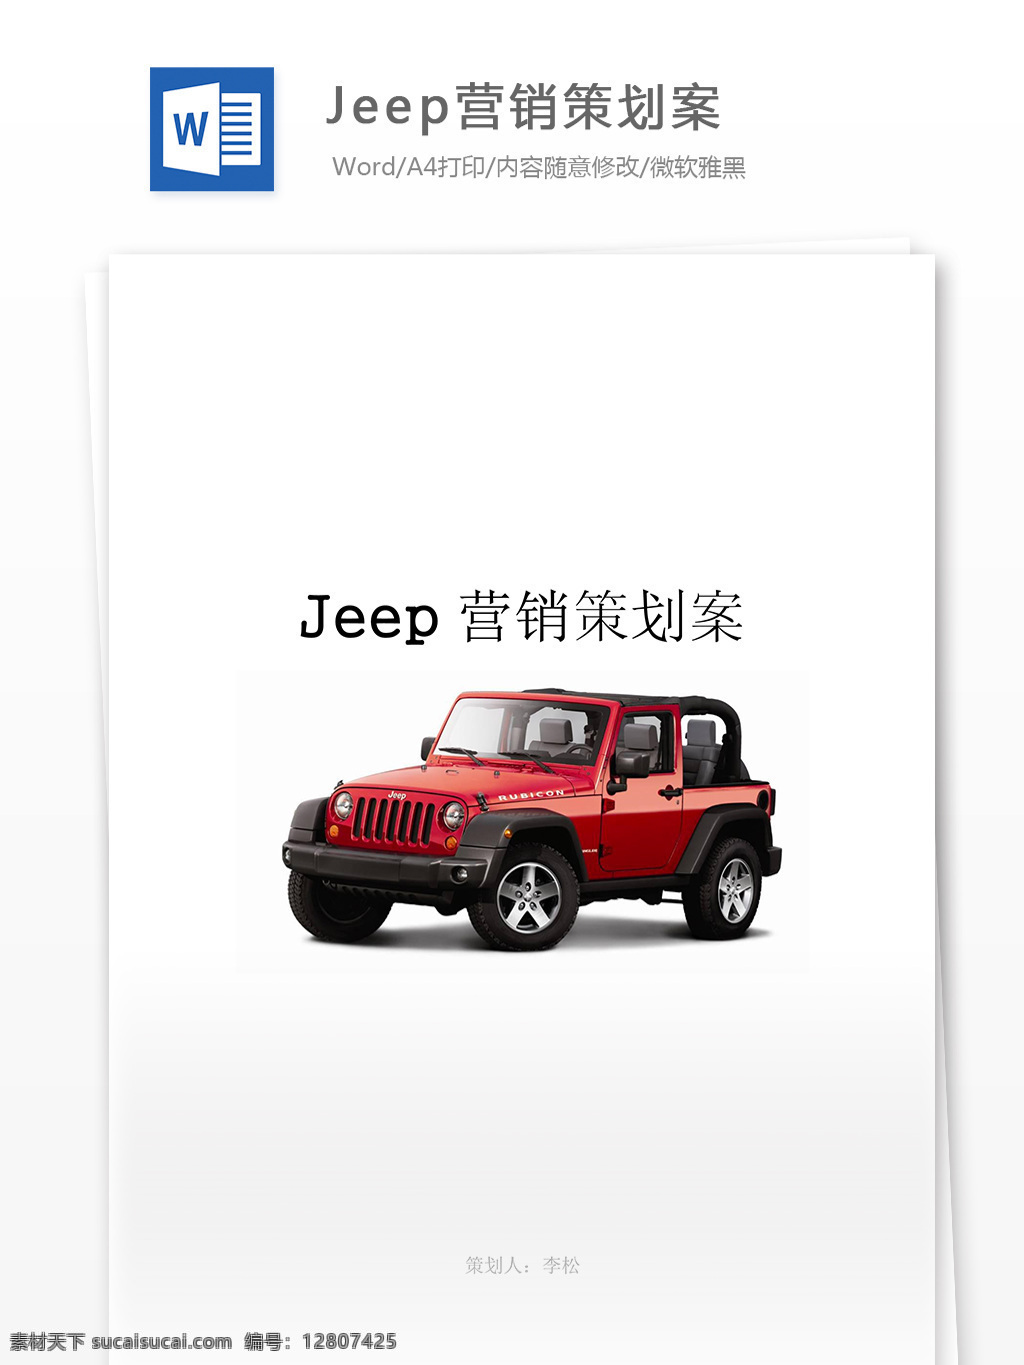 jeep 营销策划 案 word 文档模板 汇报 实用文档 心得体会 总结 市场营销